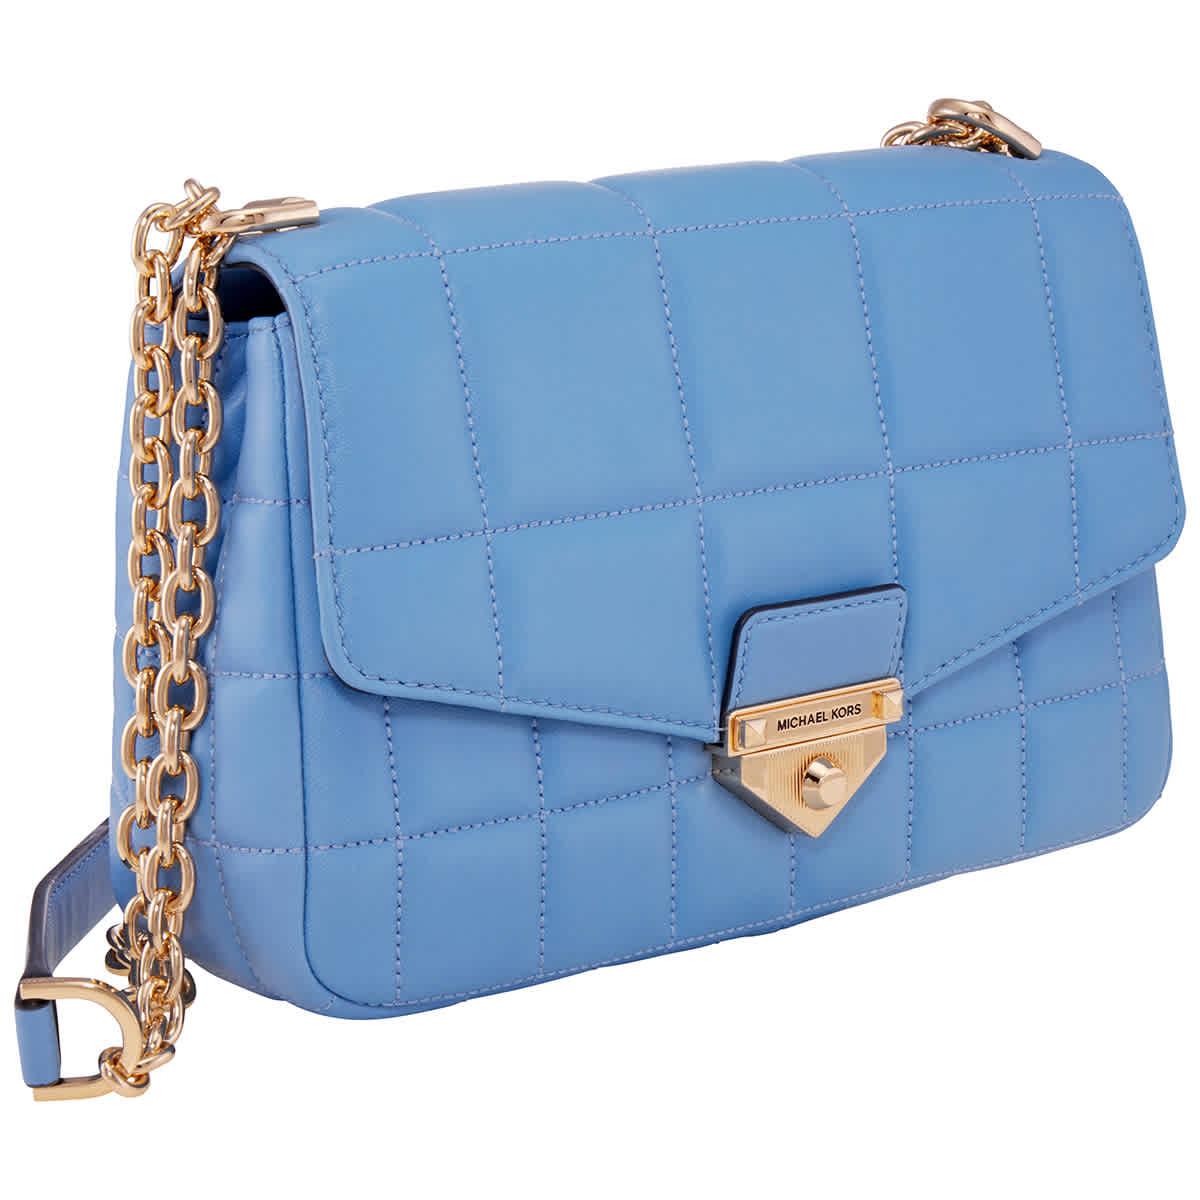 Michael Kors Soho Large Quilted Leather Shoulder Bag in Blue | Lyst